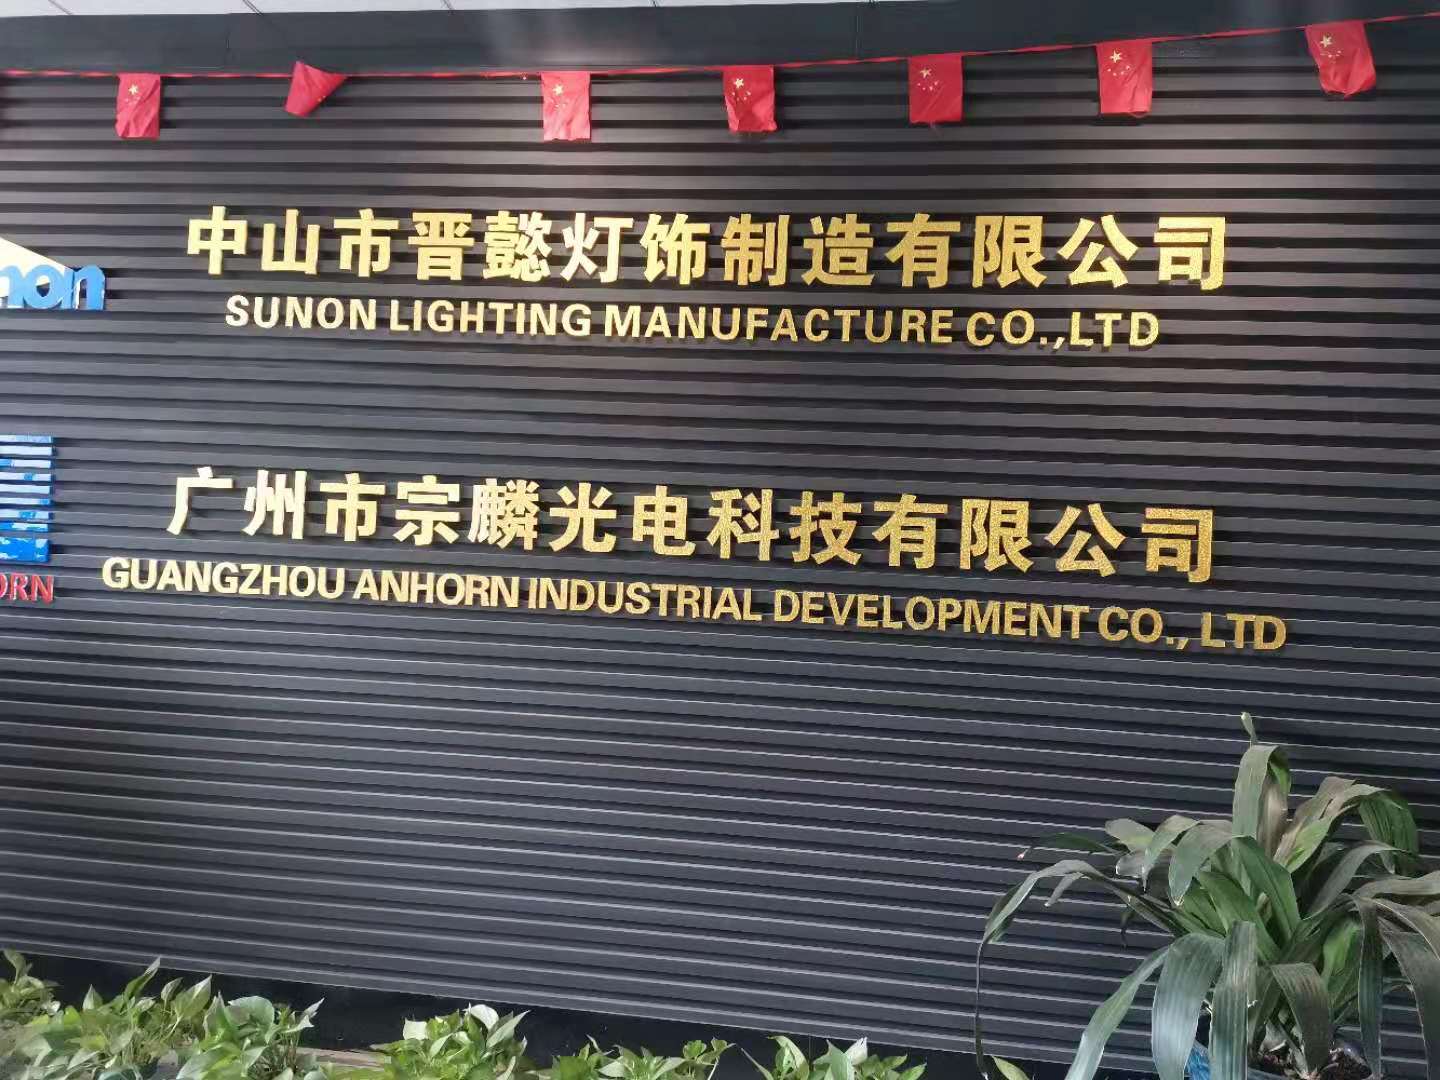 In 2020,Sunon lighting moved to Zhongshan city